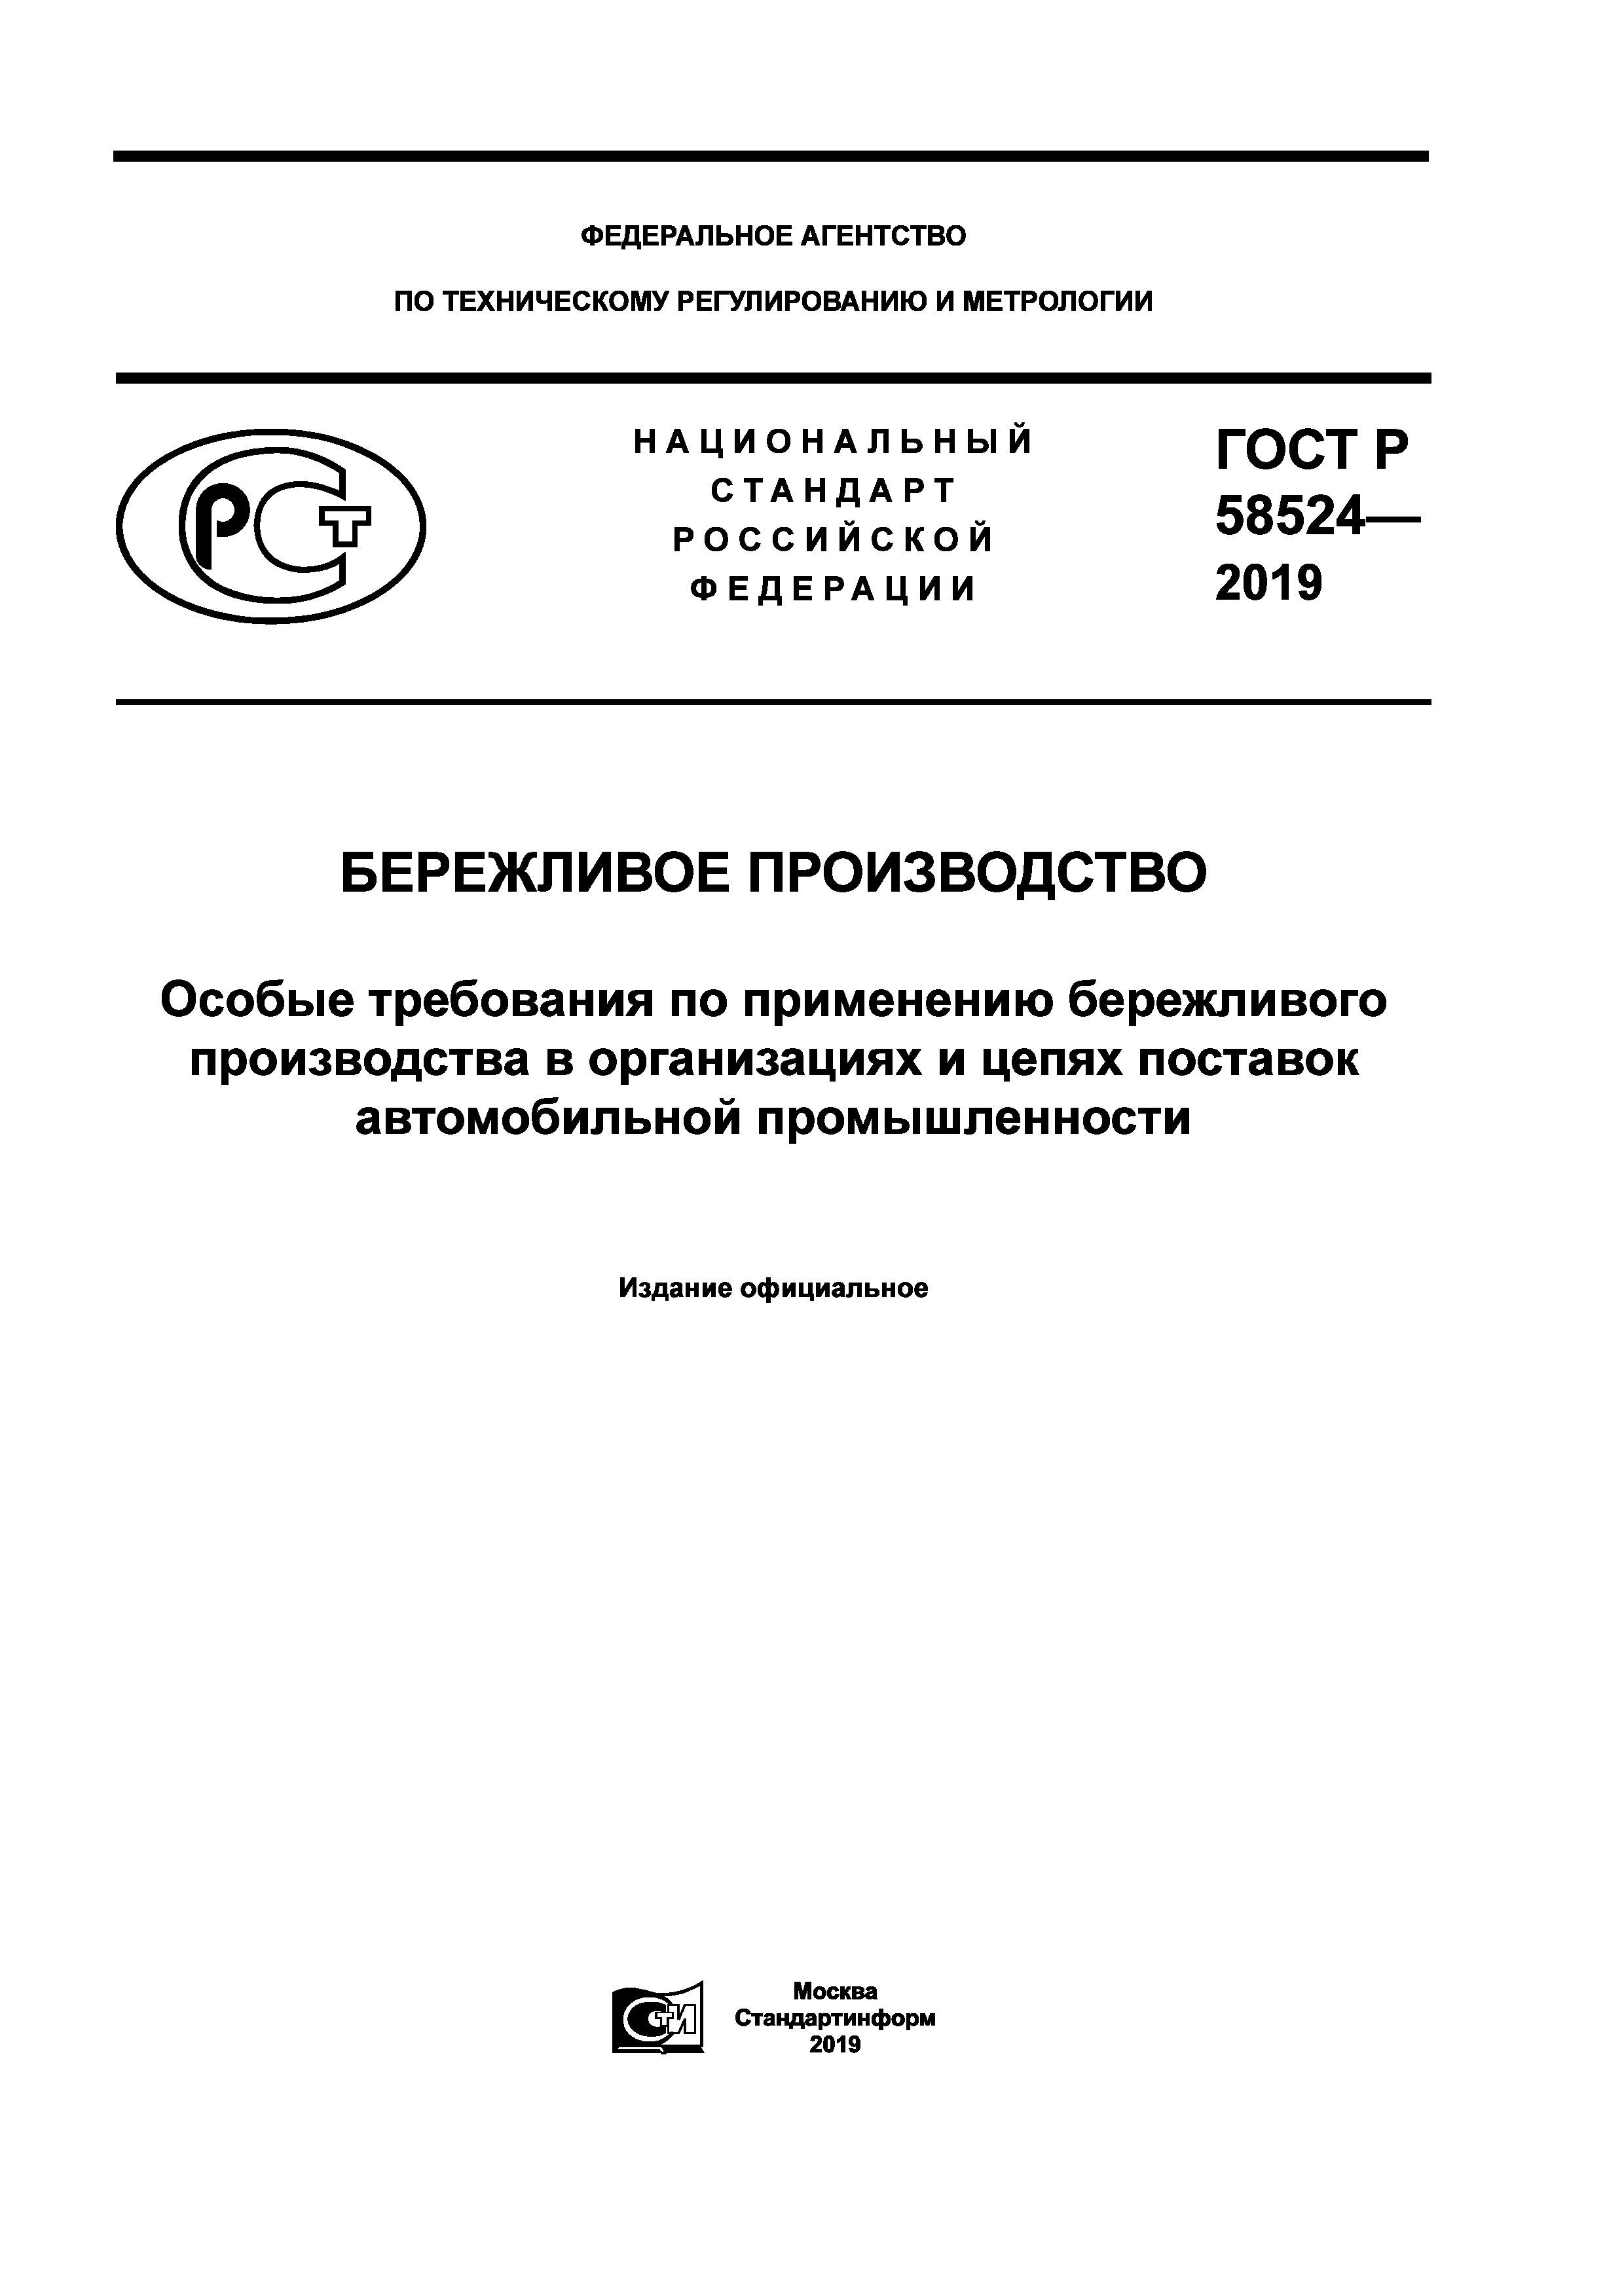 ГОСТ Р 58524-2019